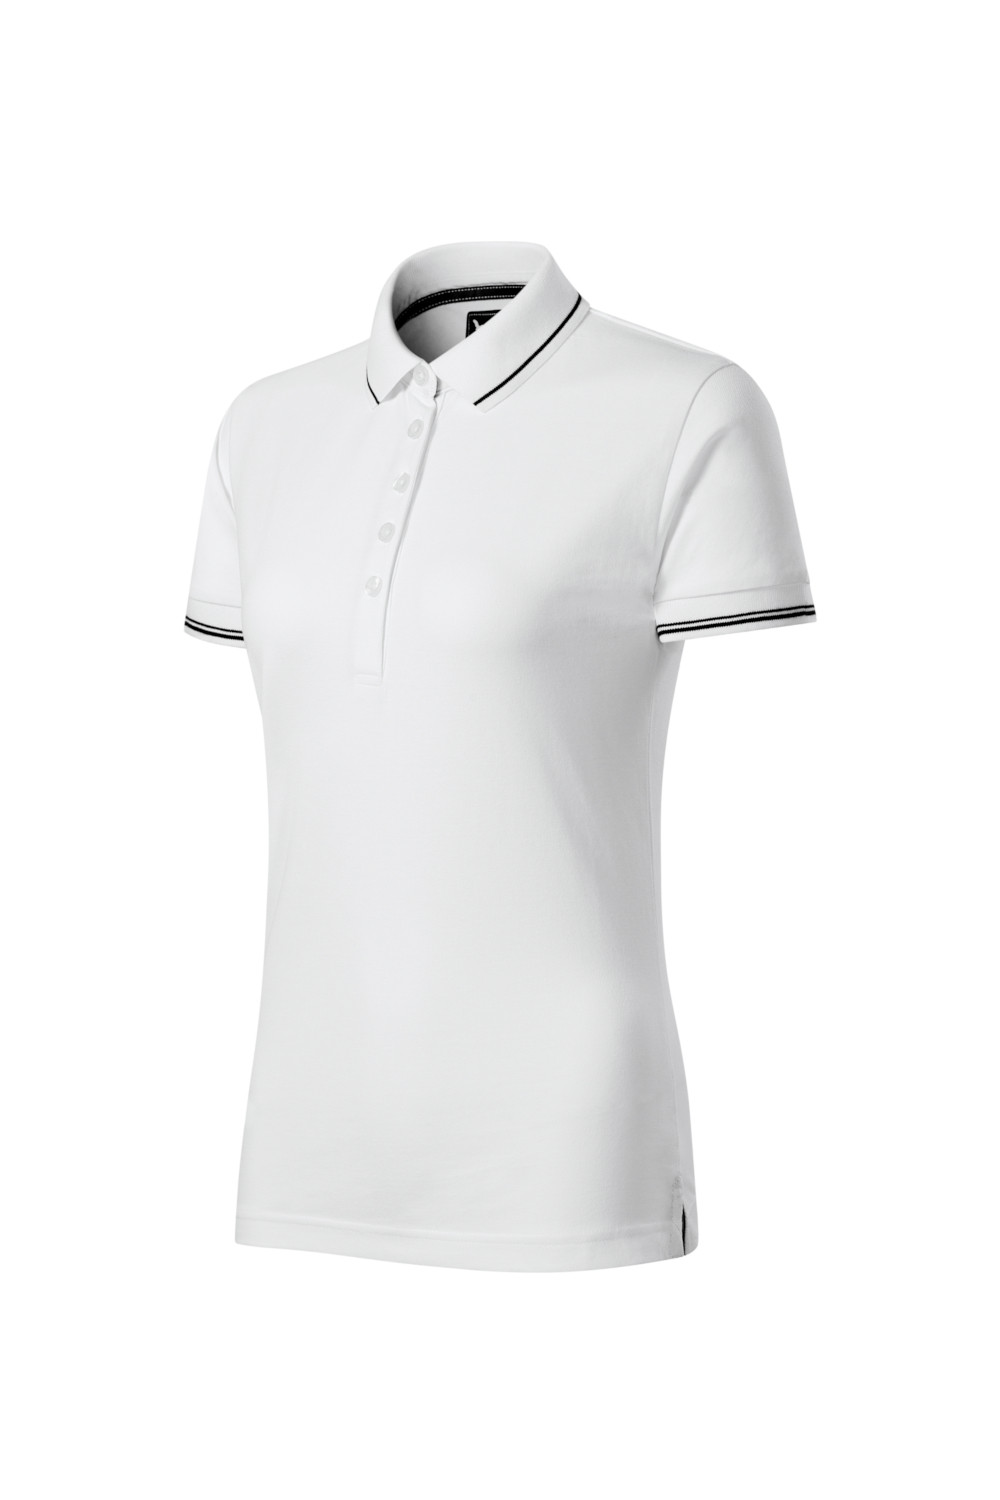 Koszulka Polo damska 95% bawełna 5% elastan 253 koszulki polo biały